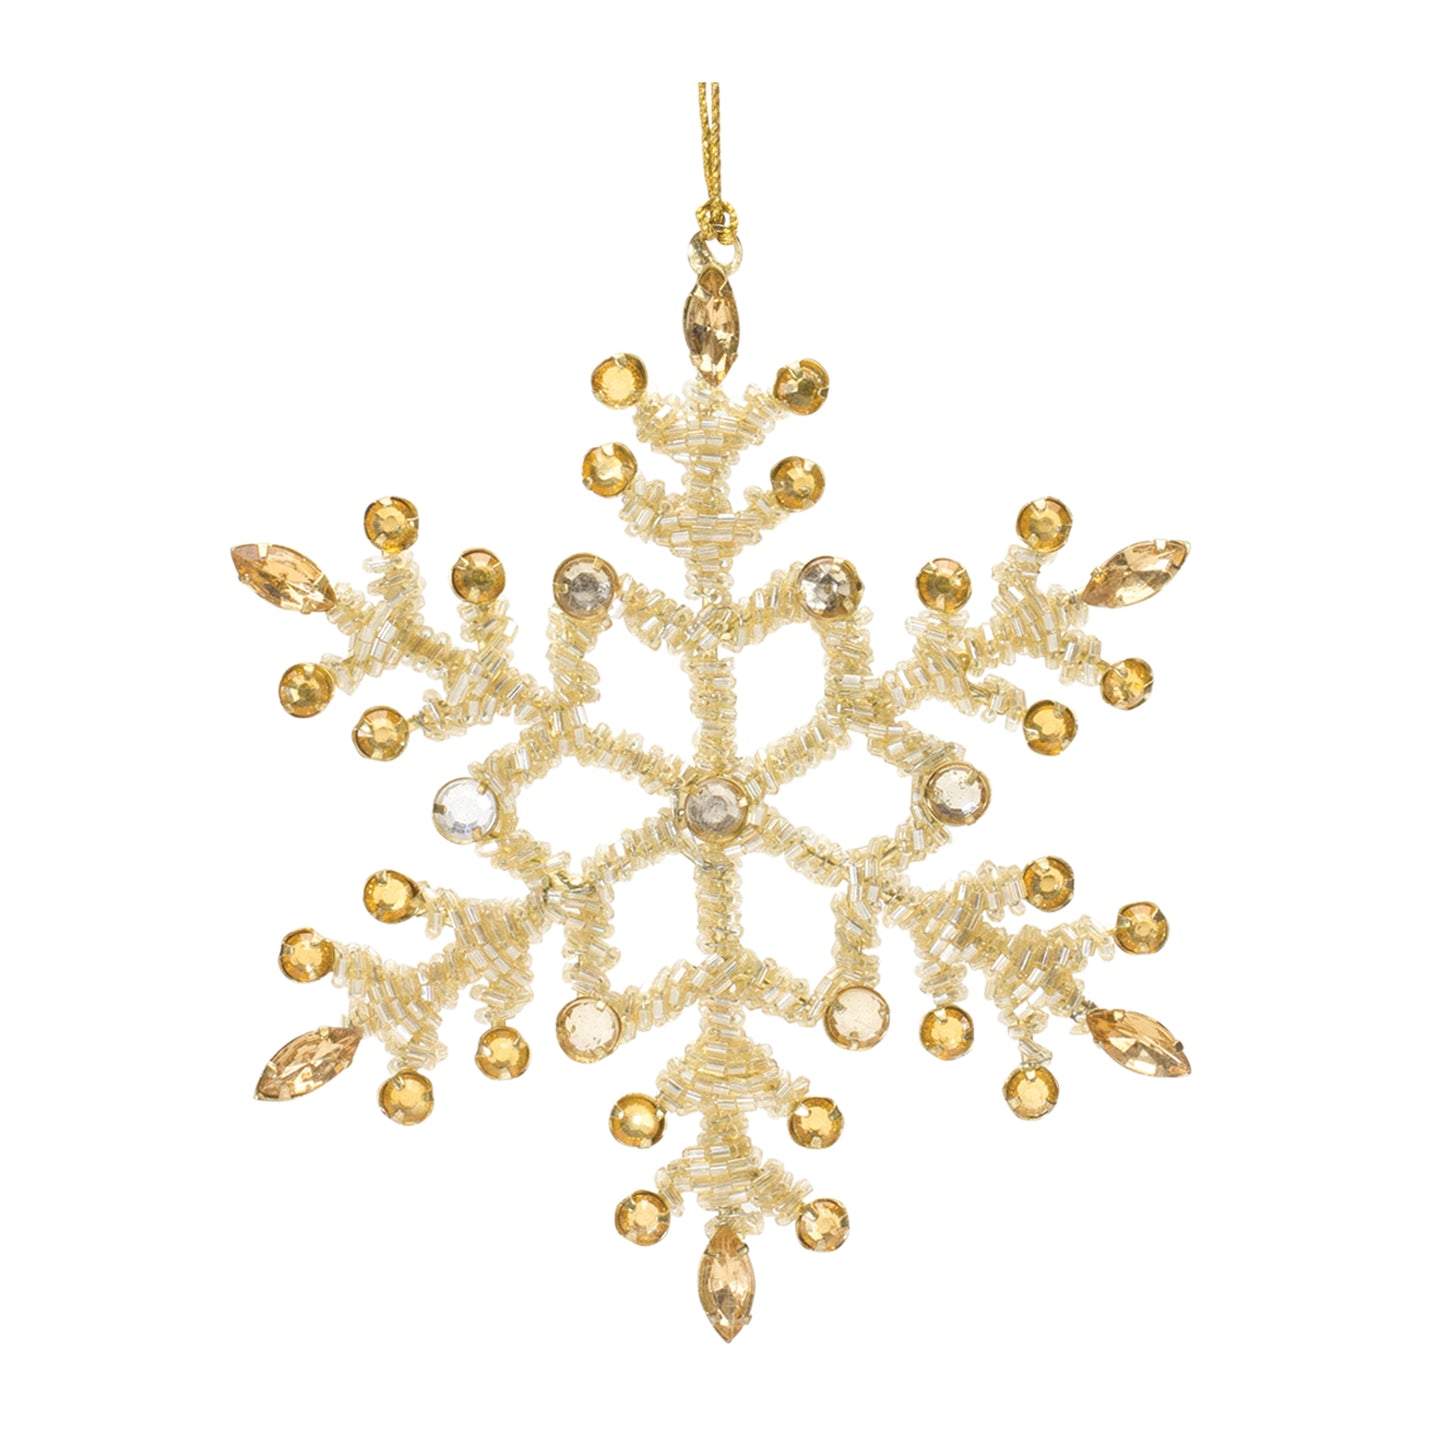 5.5"H Iron/Glass Snowflake Ornament